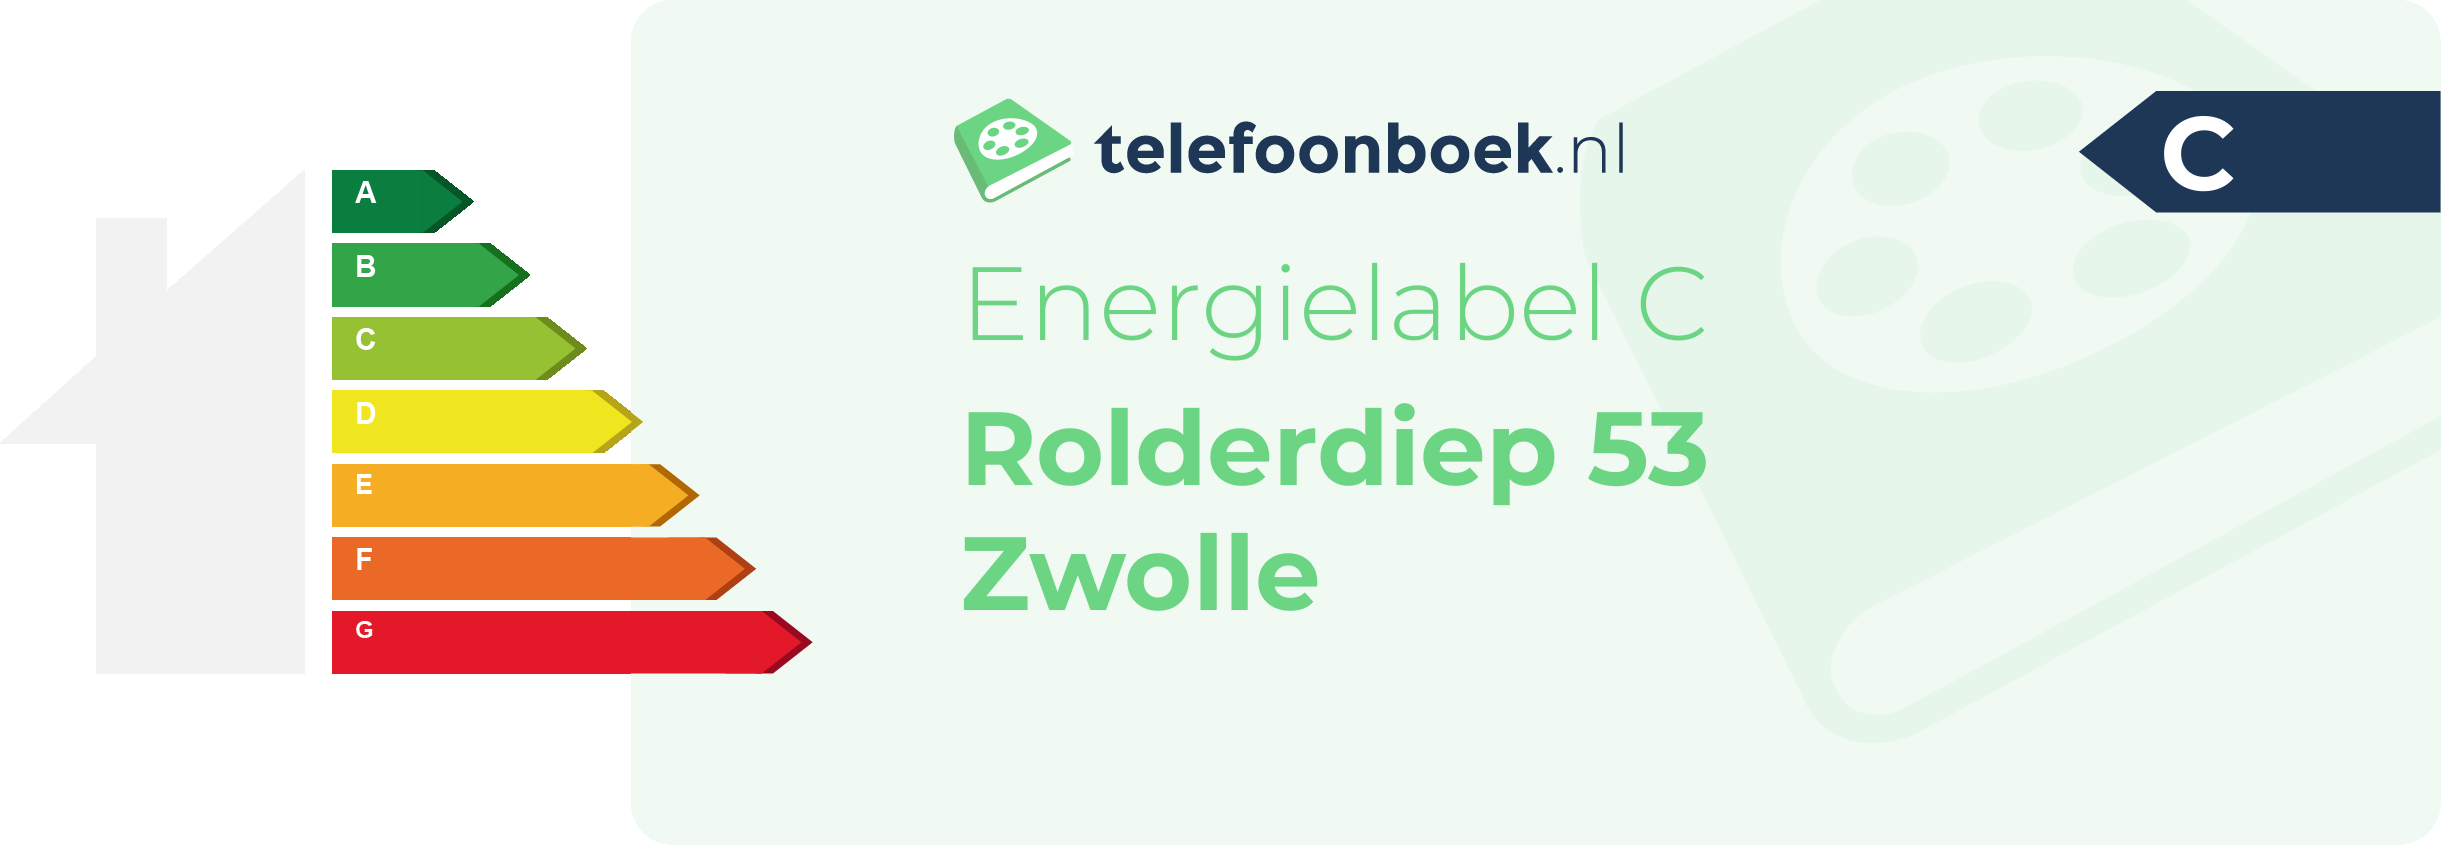 Energielabel Rolderdiep 53 Zwolle